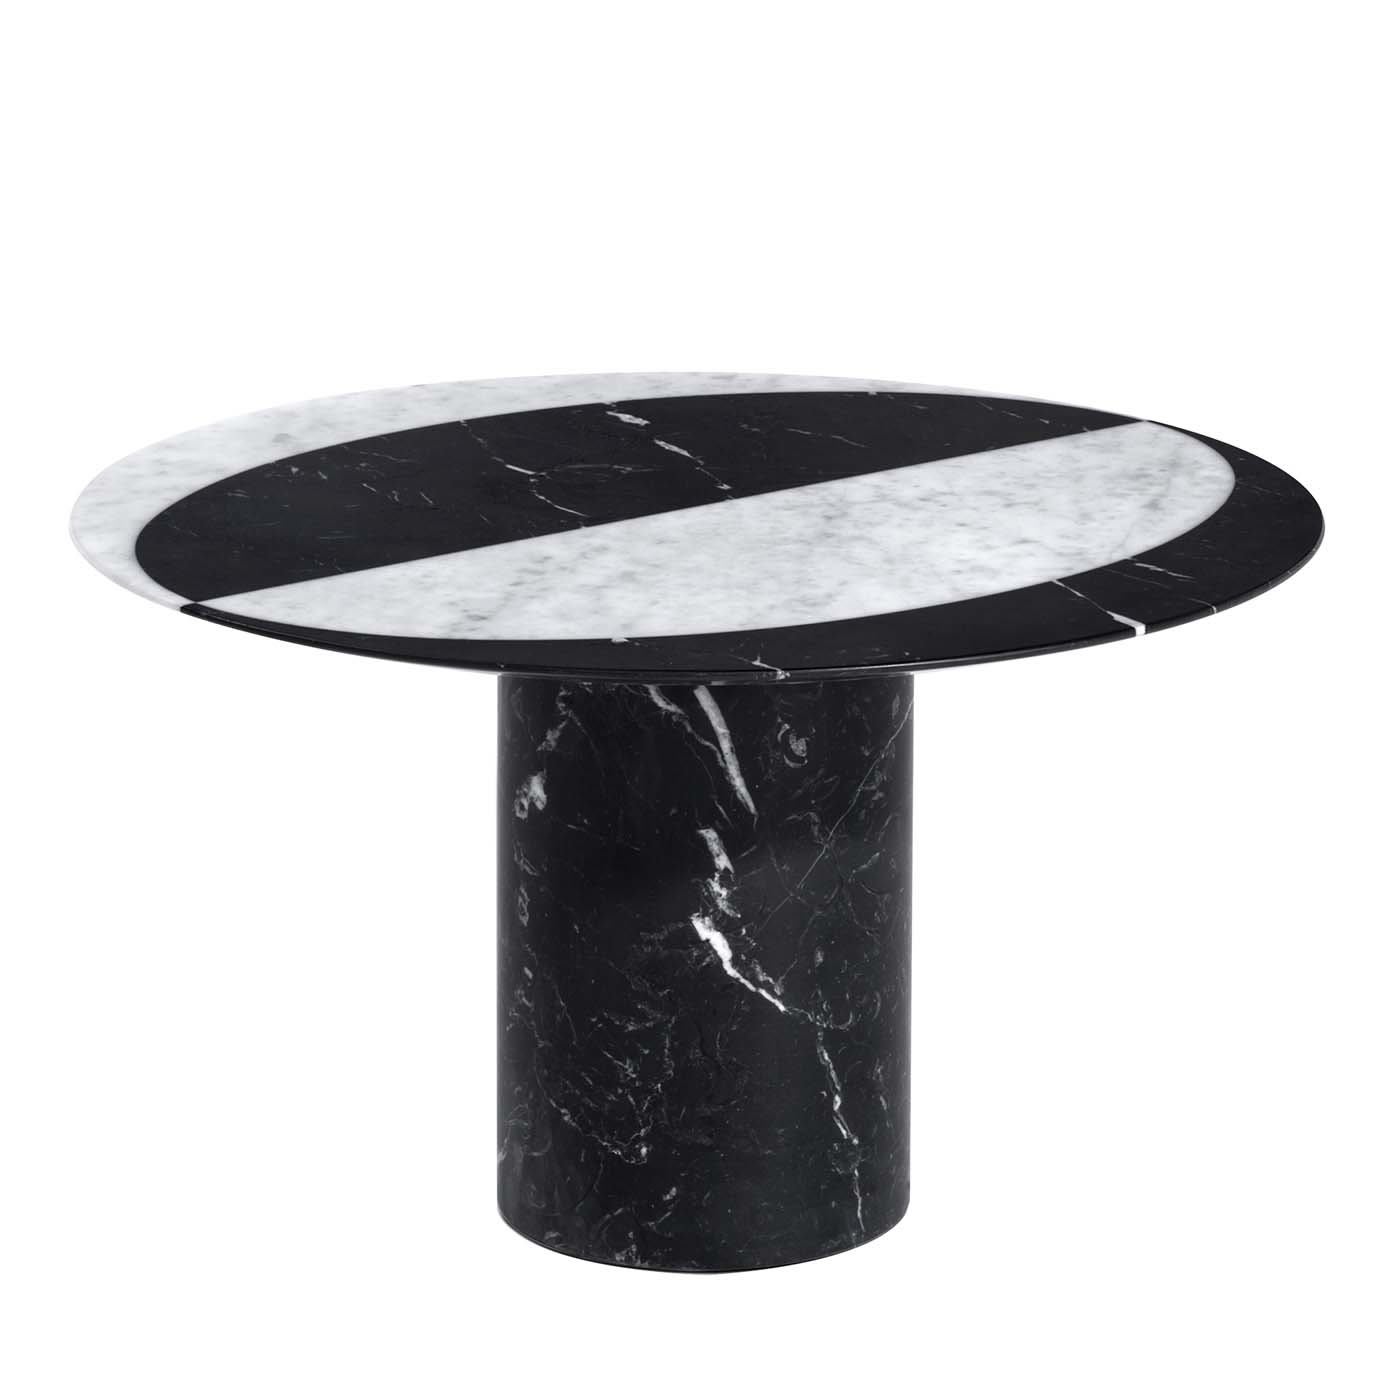 Proiezioni Round Black and White Marble Coffee Table by Elisa Ossino - Salvatori